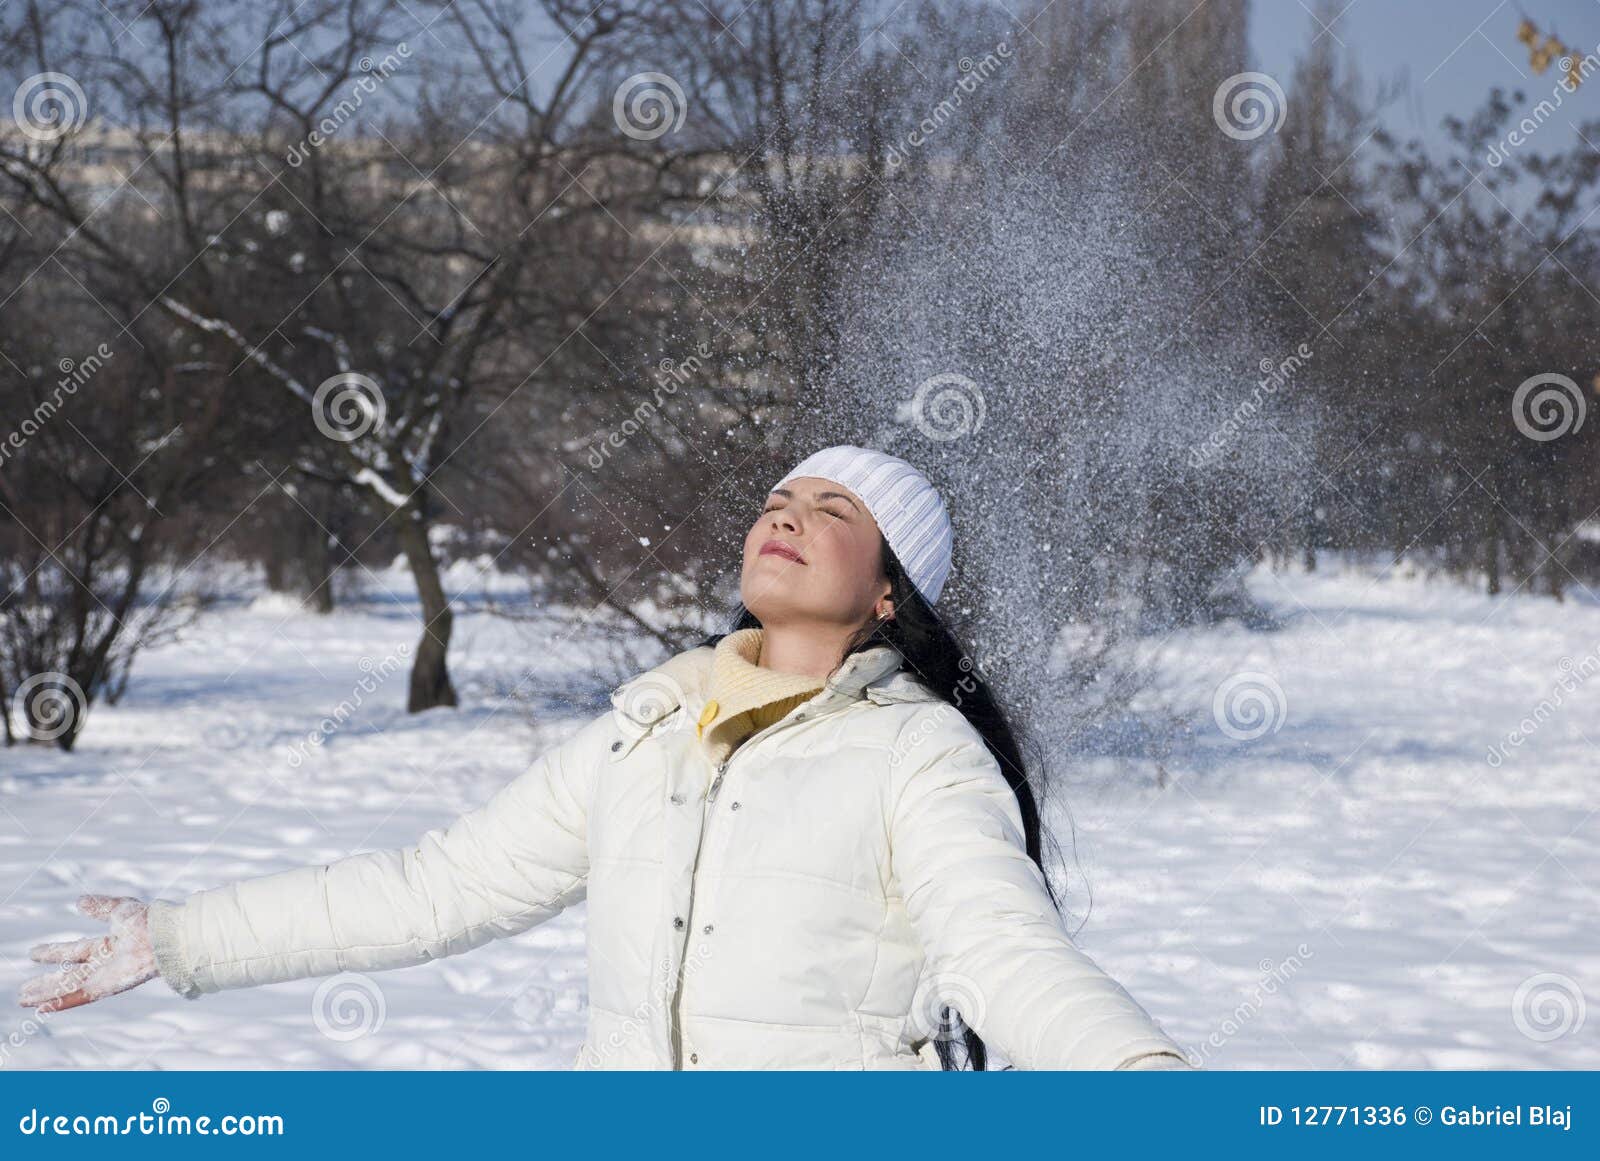 Woman Throw Snow Up Royalty Free Stock Image - Image: 12771336